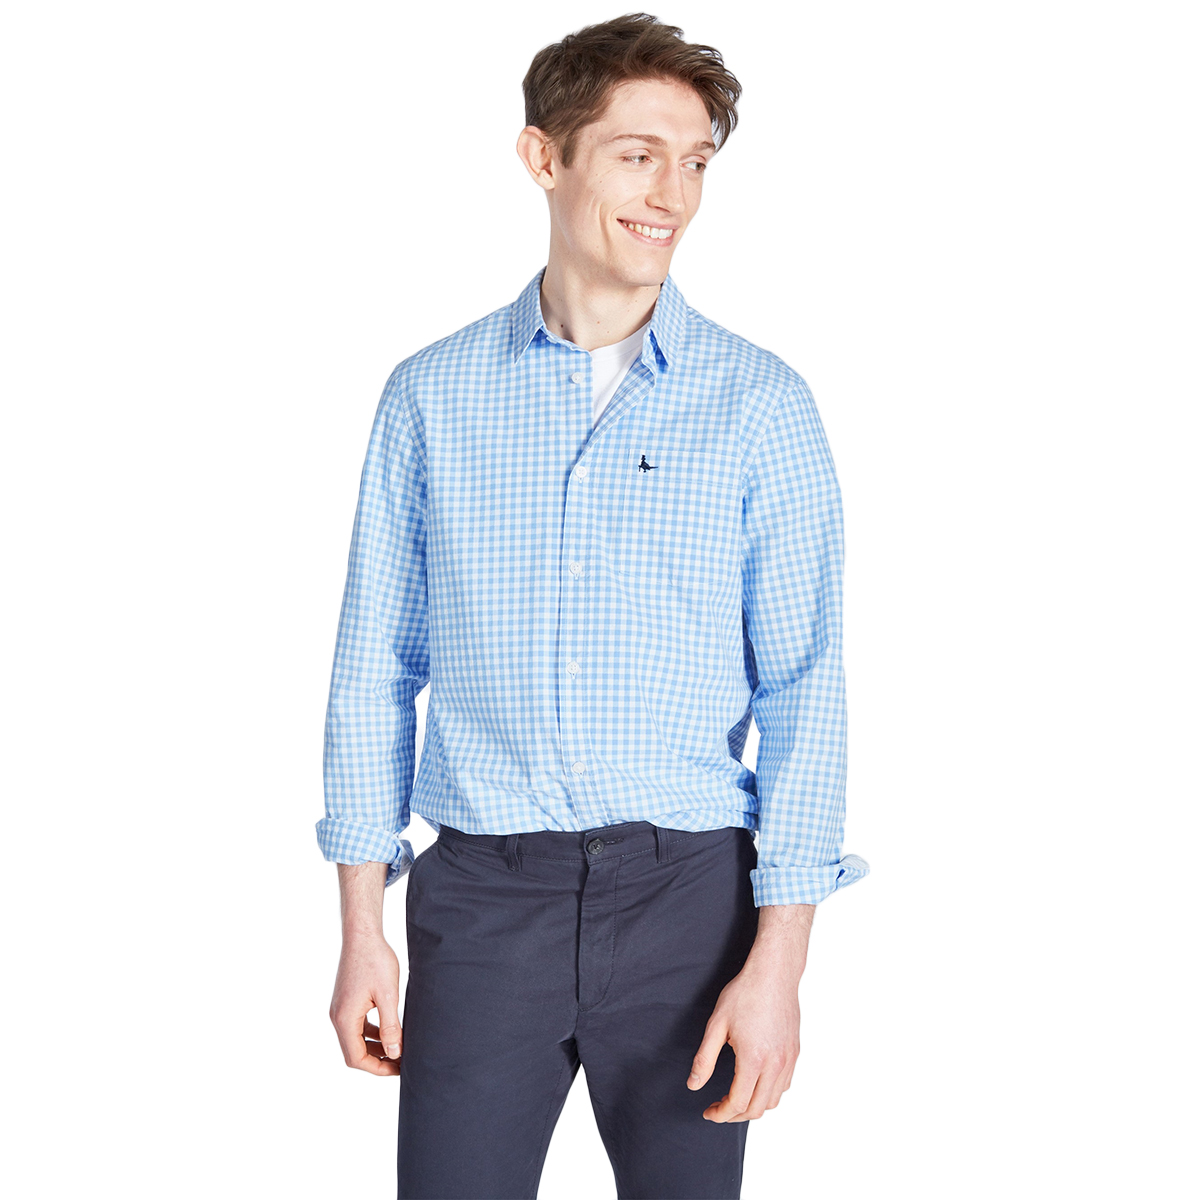 Jack Wills Men's Long-Sleeve Ruxton Poplin Gingham Shirt - Blue, L